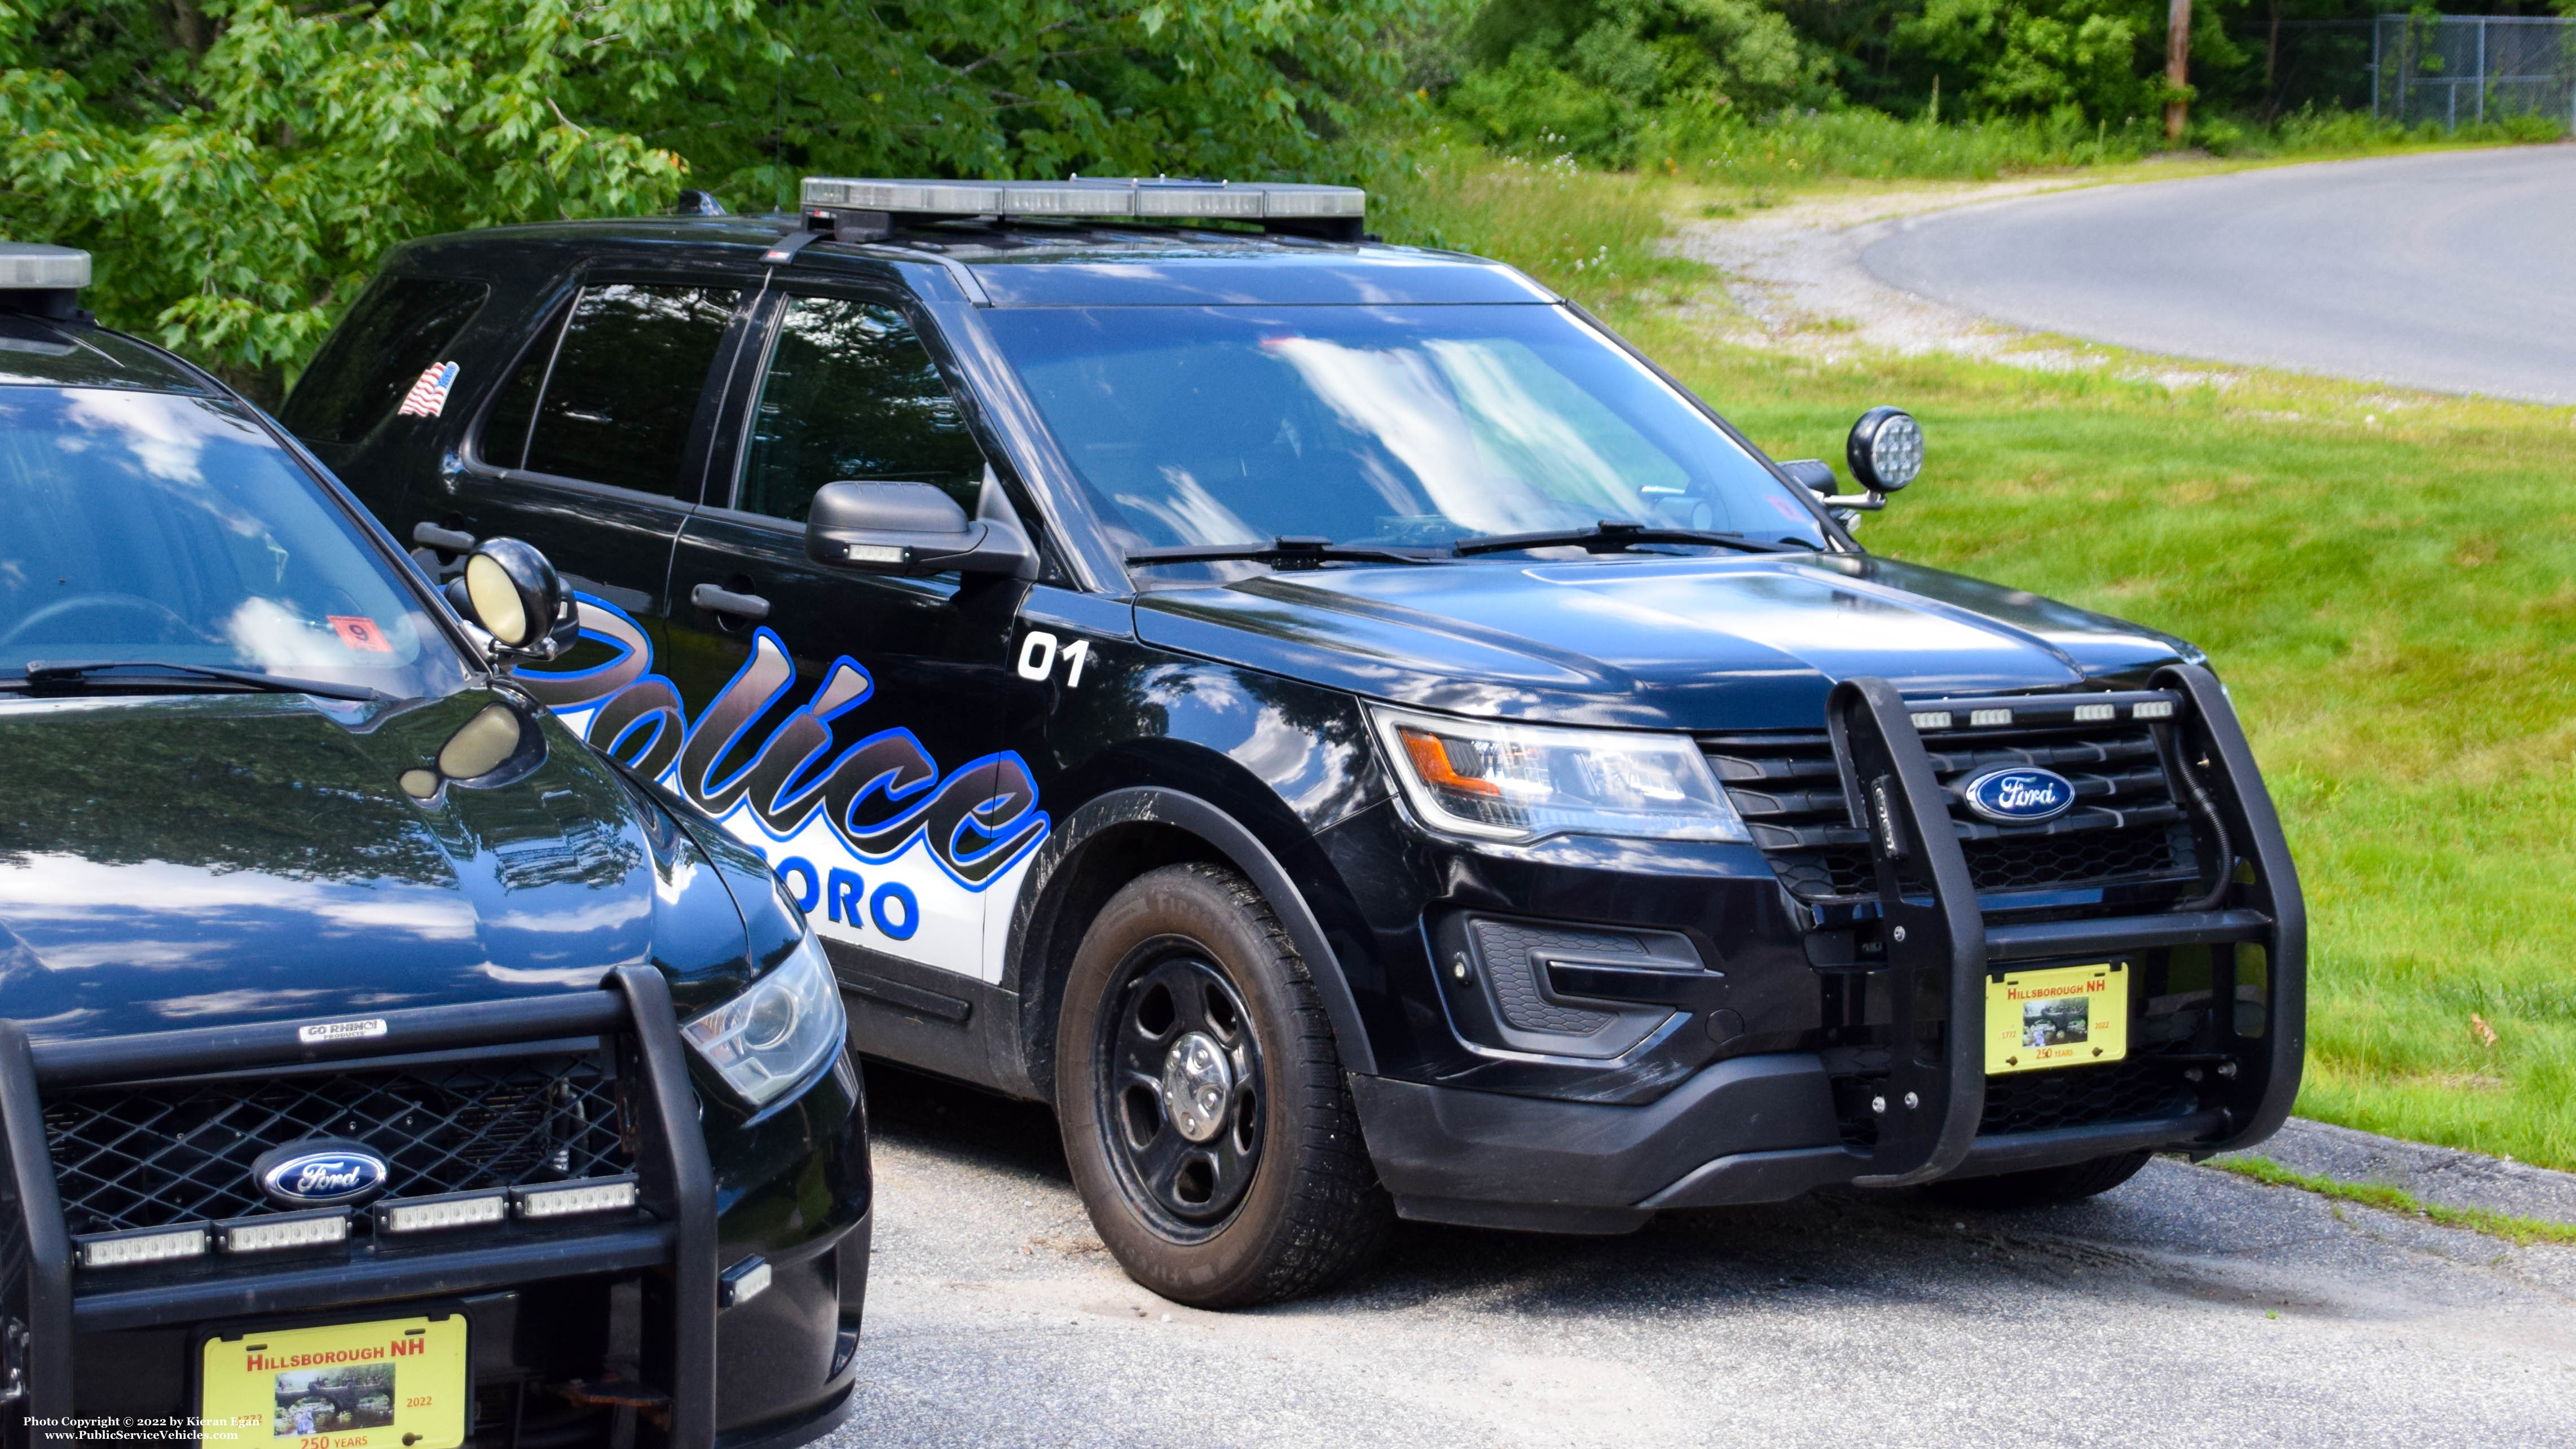 A photo  of Hillsborough Police
            Car 1, a 2016-2019 Ford Police Interceptor Utility             taken by Kieran Egan